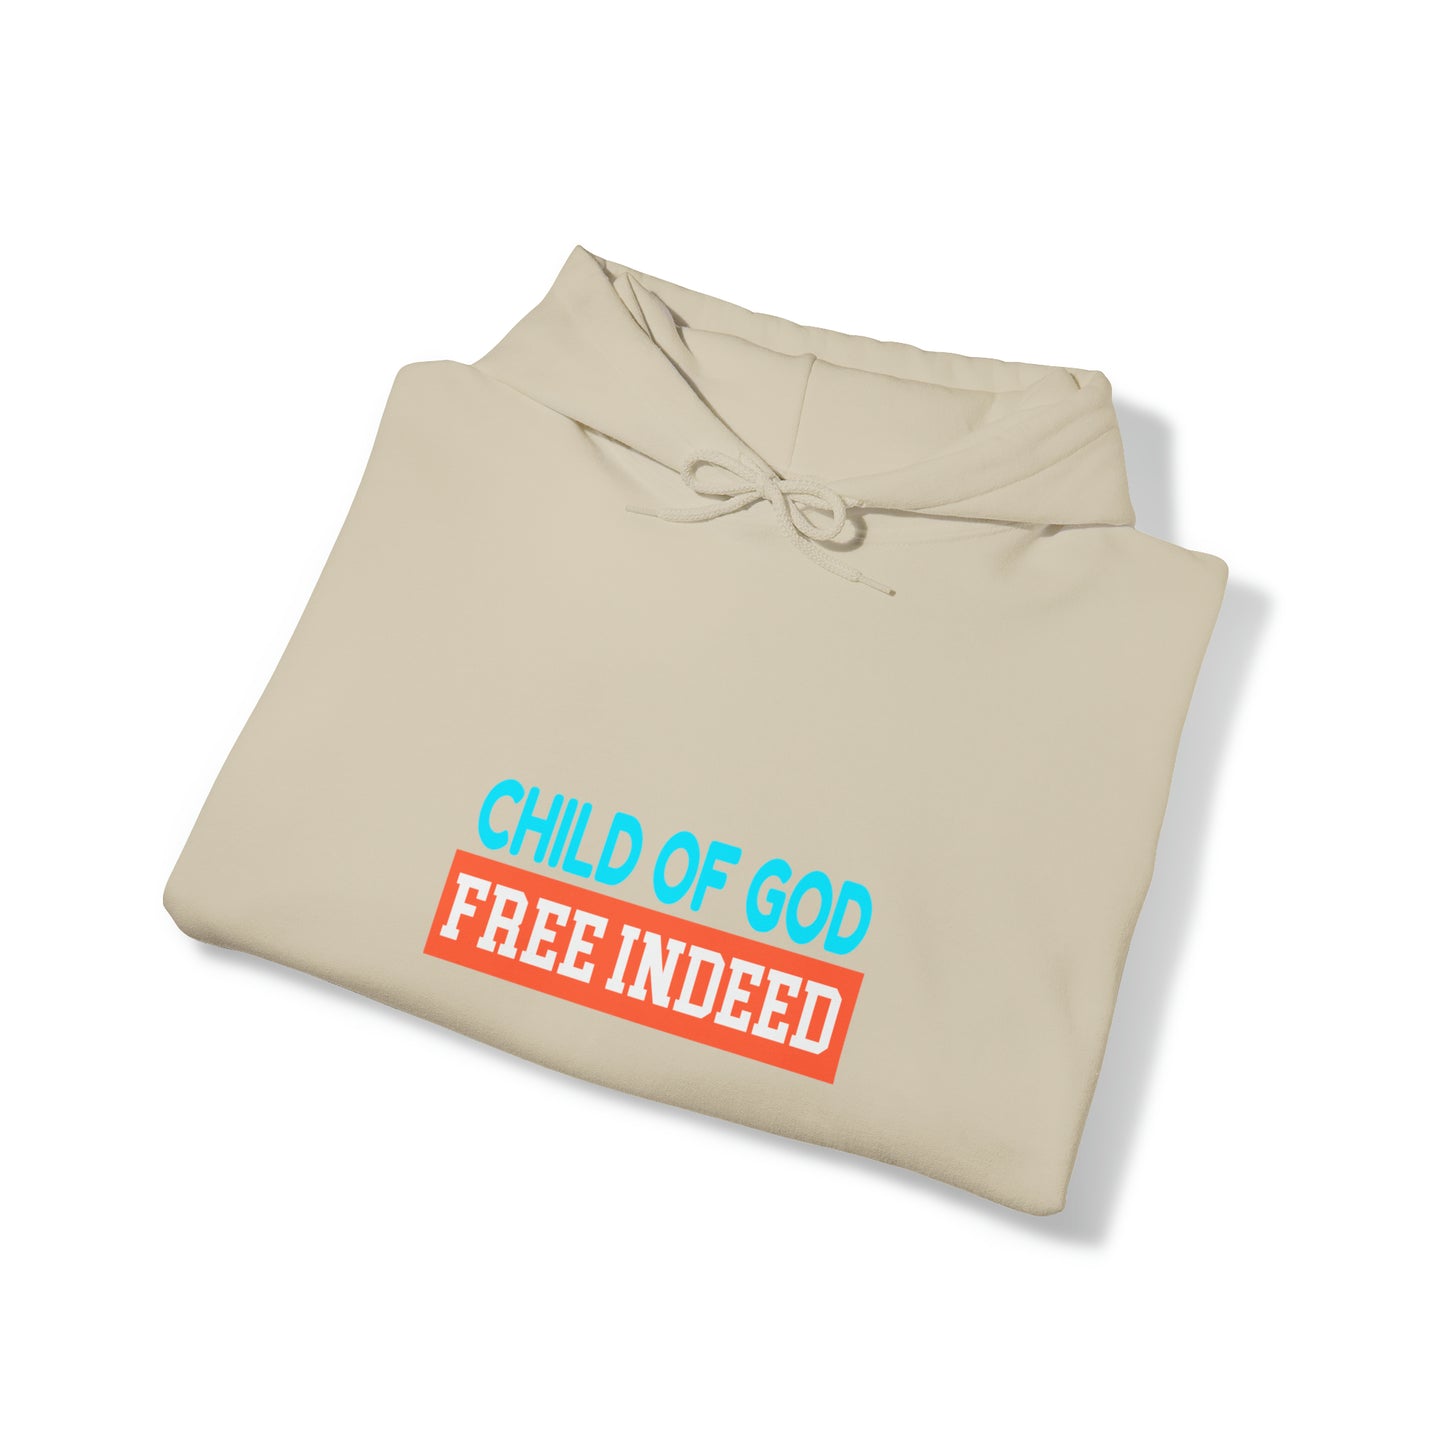 Child Of God Free Indeed Christian Unisex Pull On Hooded sweatshirt Printify